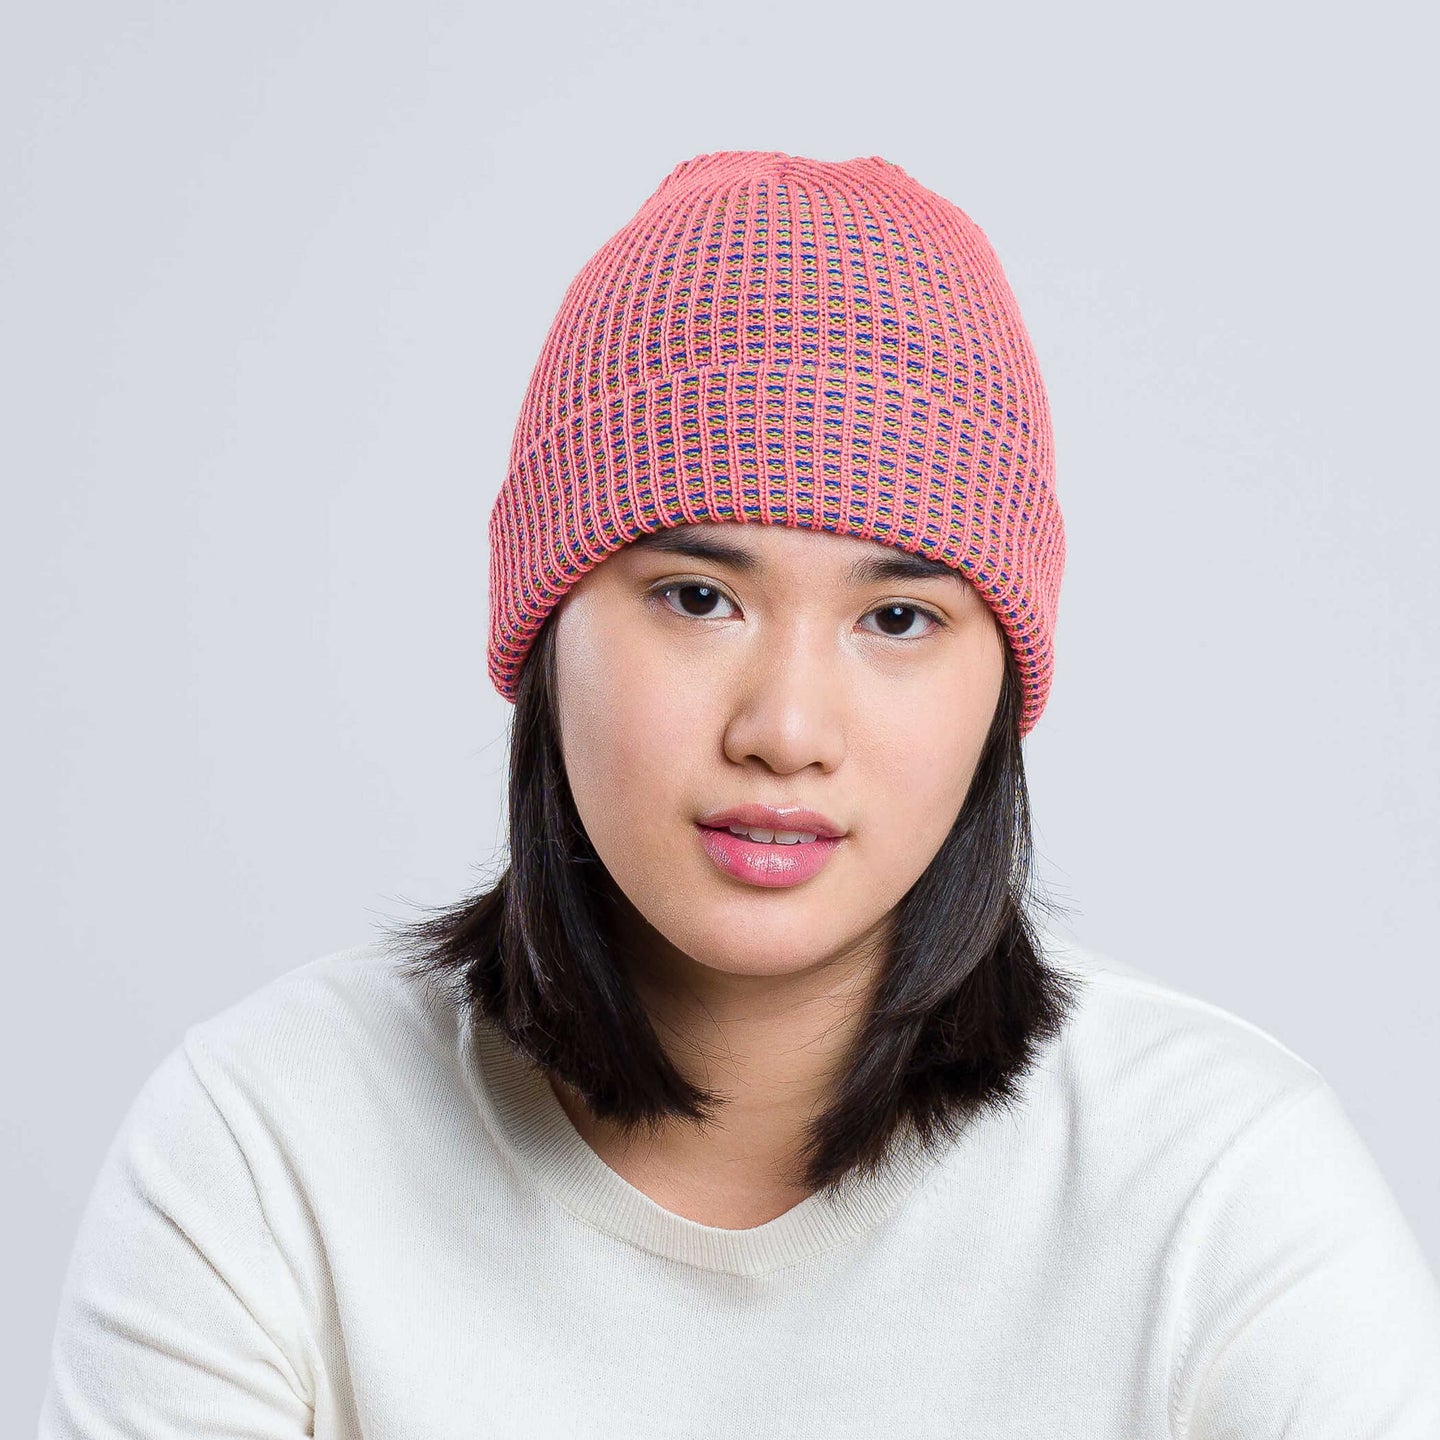 Grid Simple Rib Hat - knit slouchy beanie